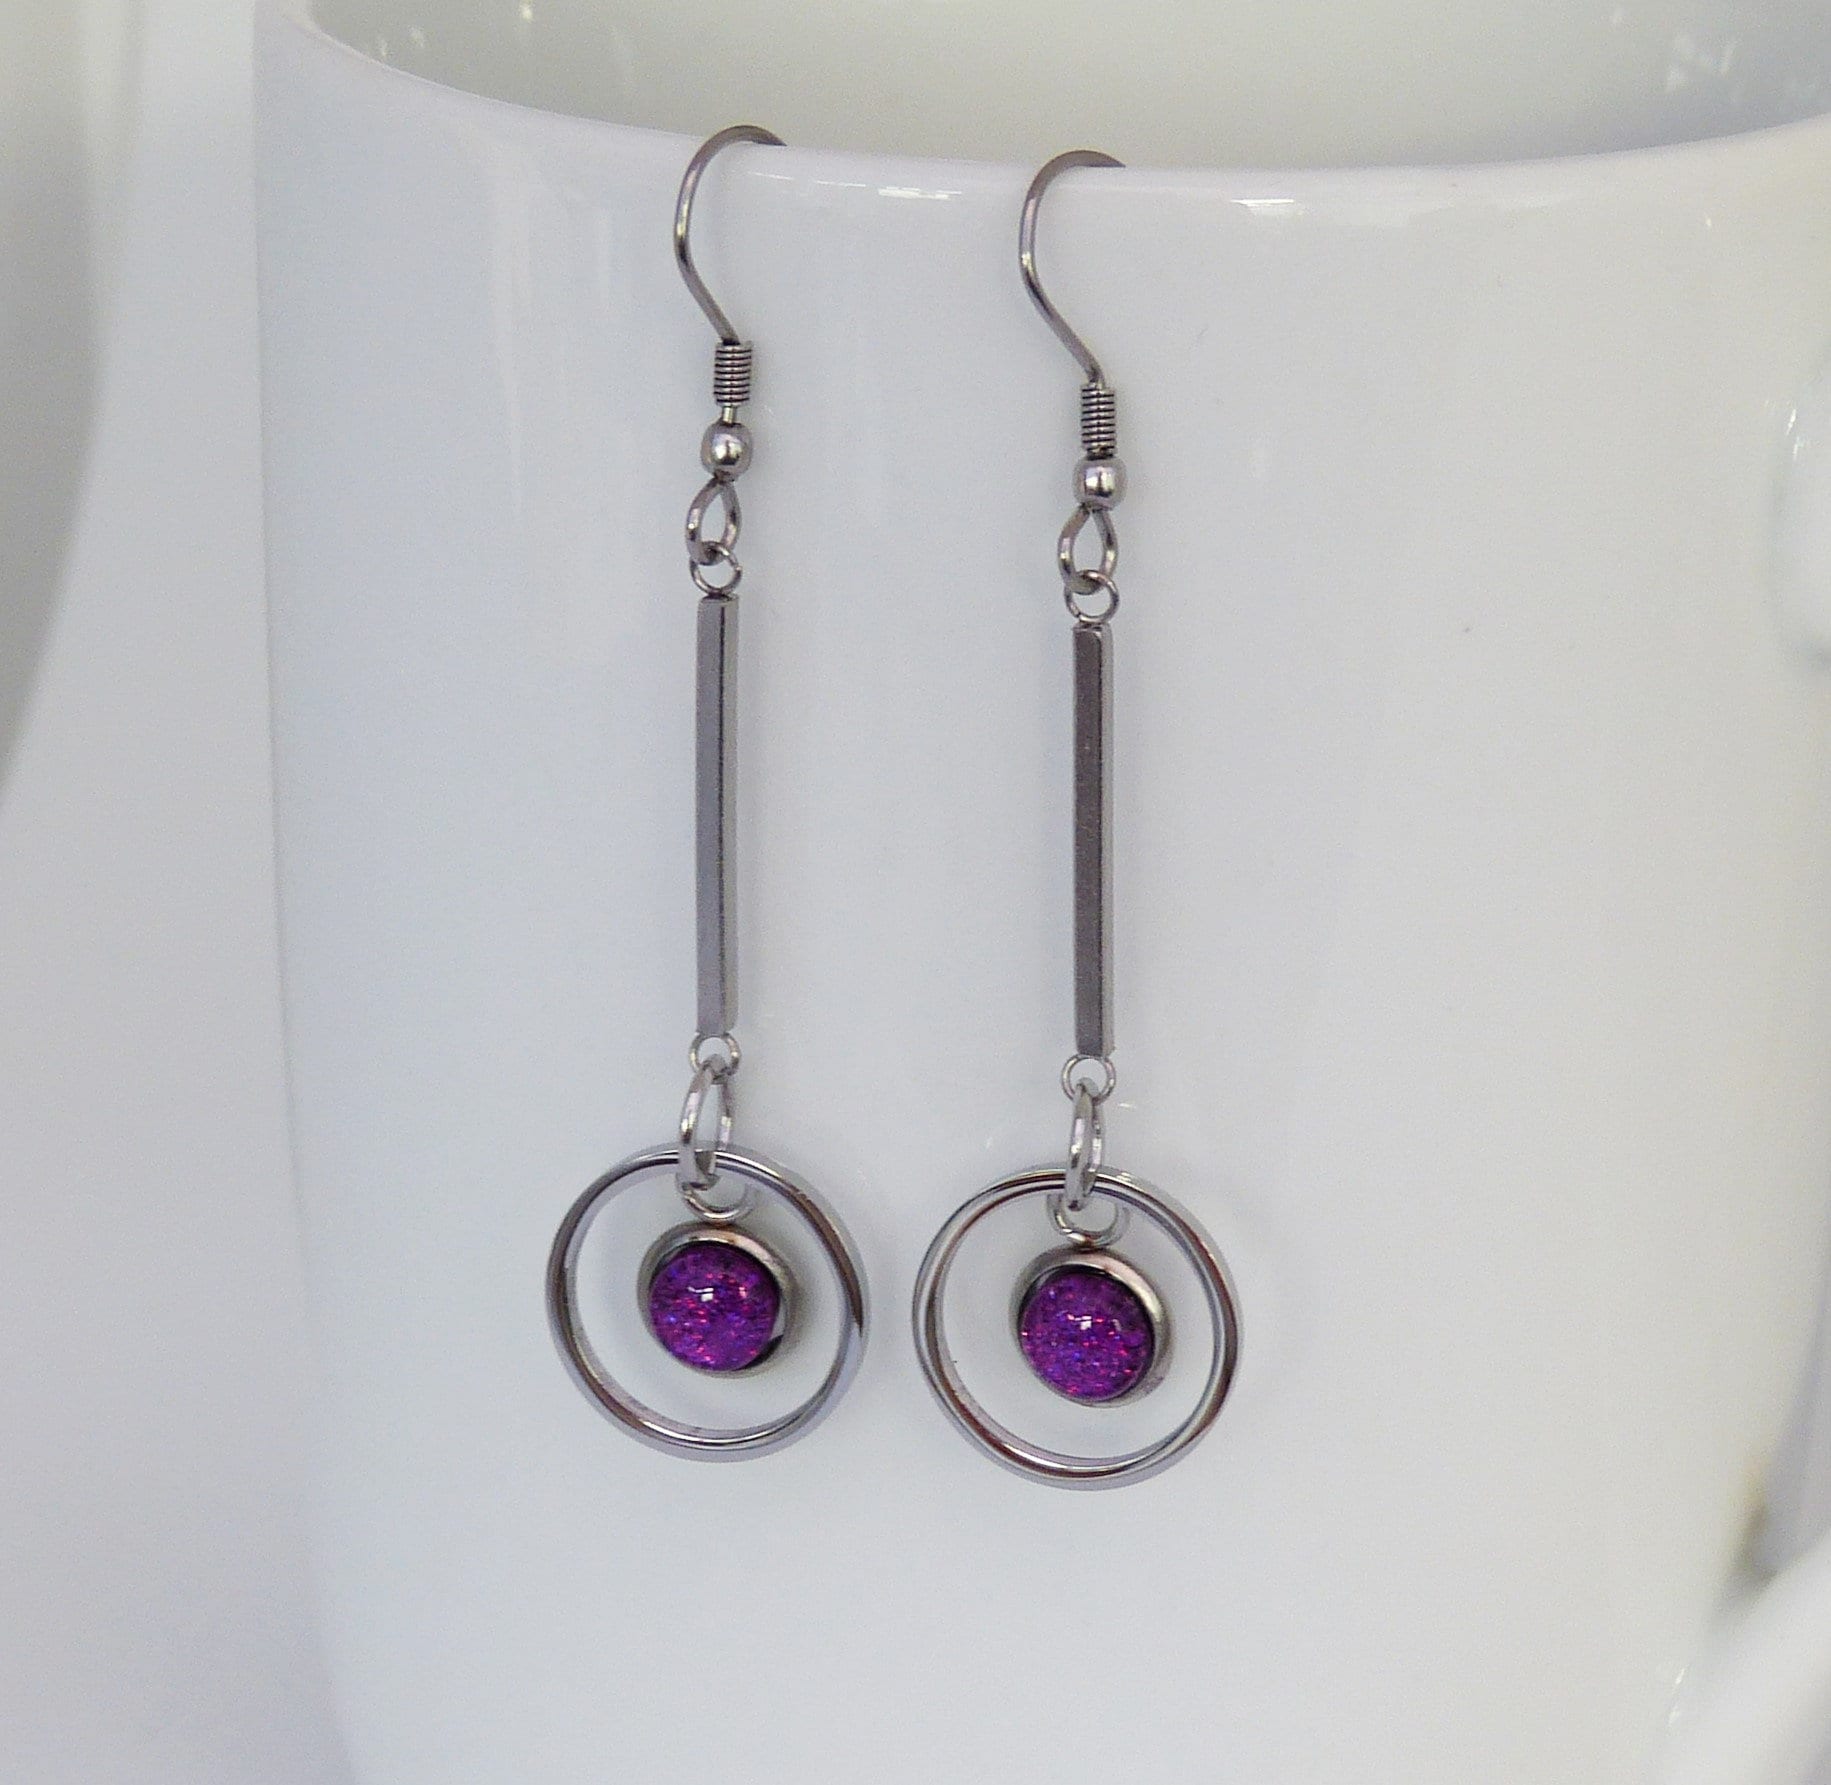 Long DangleDrop Earrings Gifts for Her Holographic Vivid Violet Purple Glitter Nail Polish Stainless Steel Stocking Filler